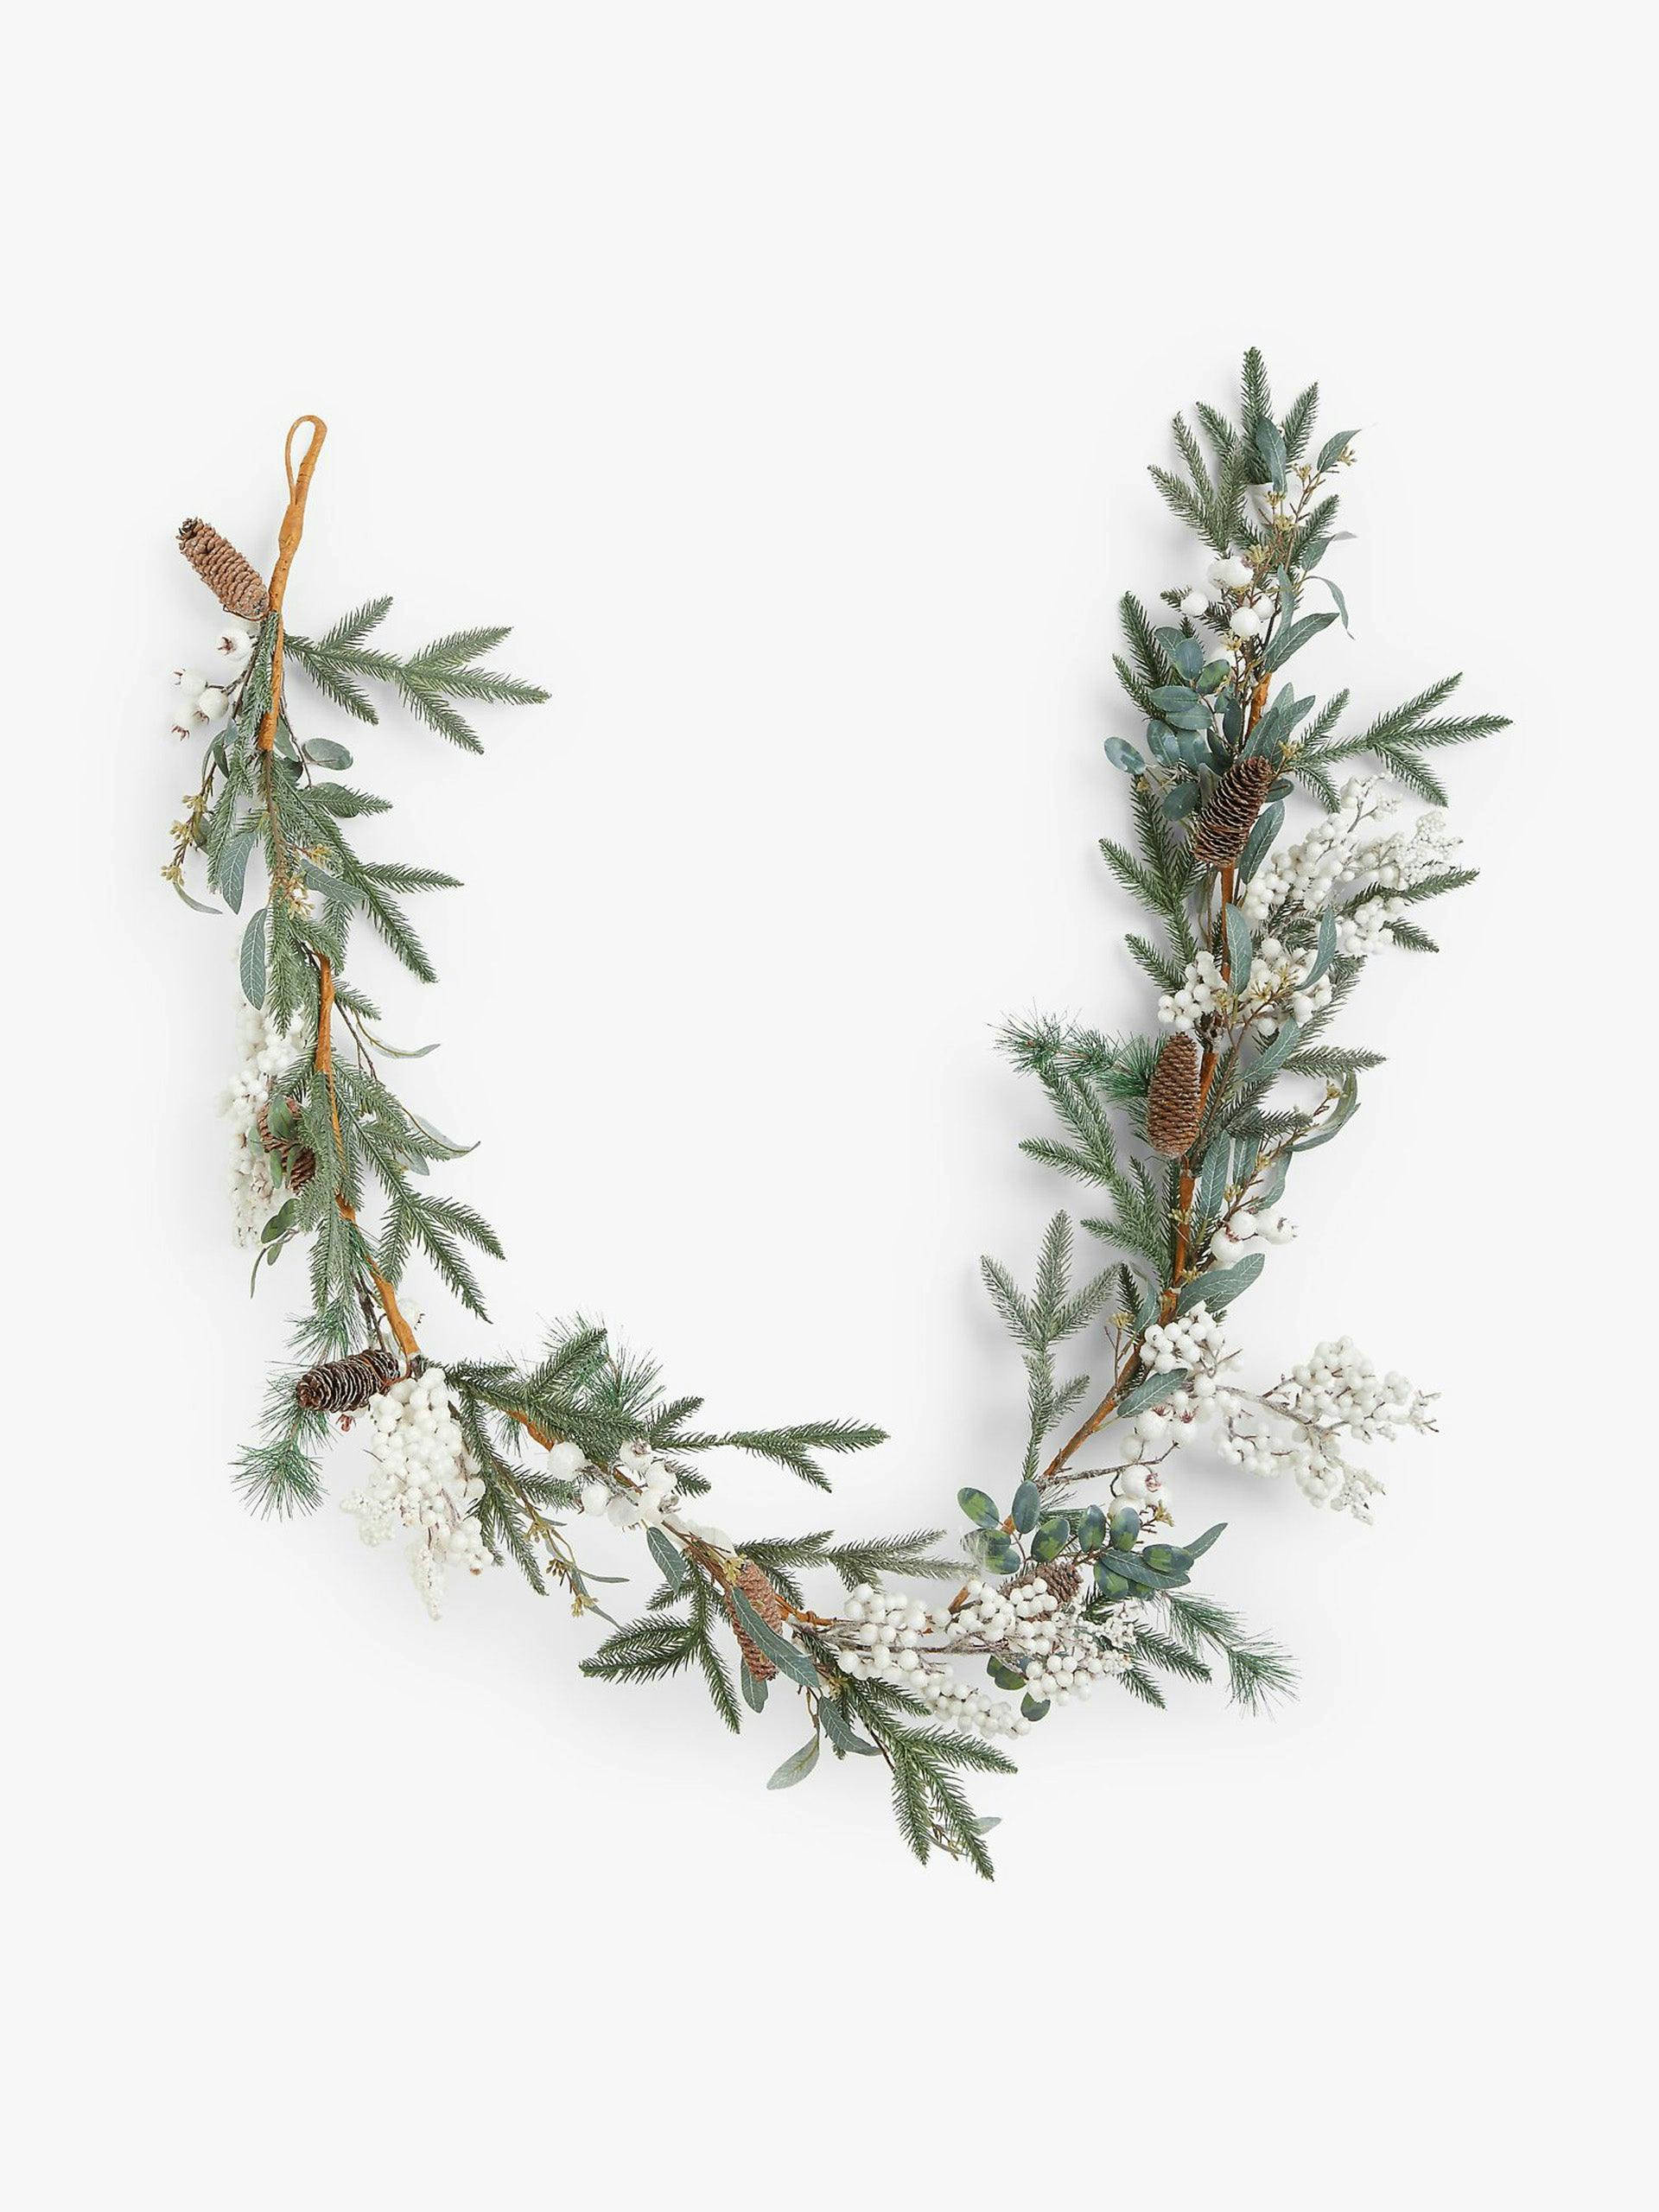 Pine and mistletoe garland